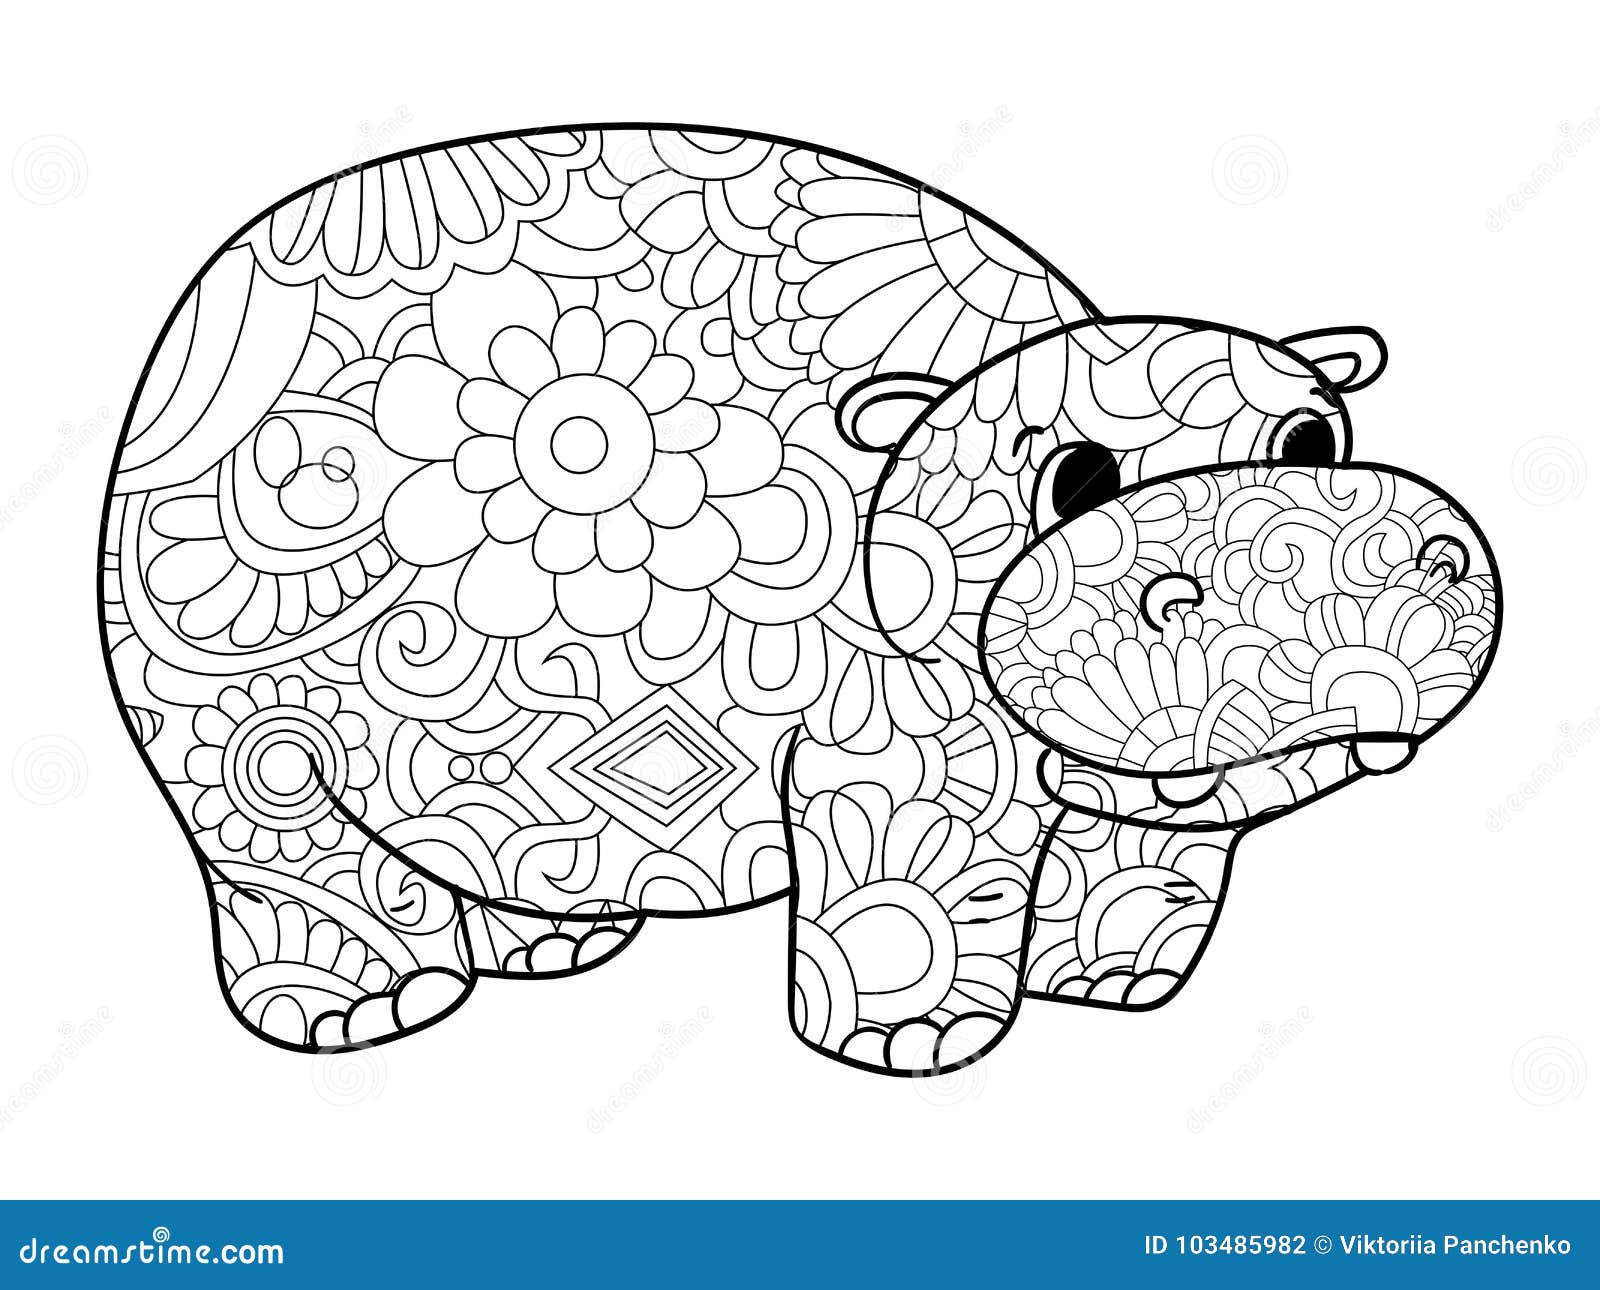 hippopotamus coloring  for adults animal